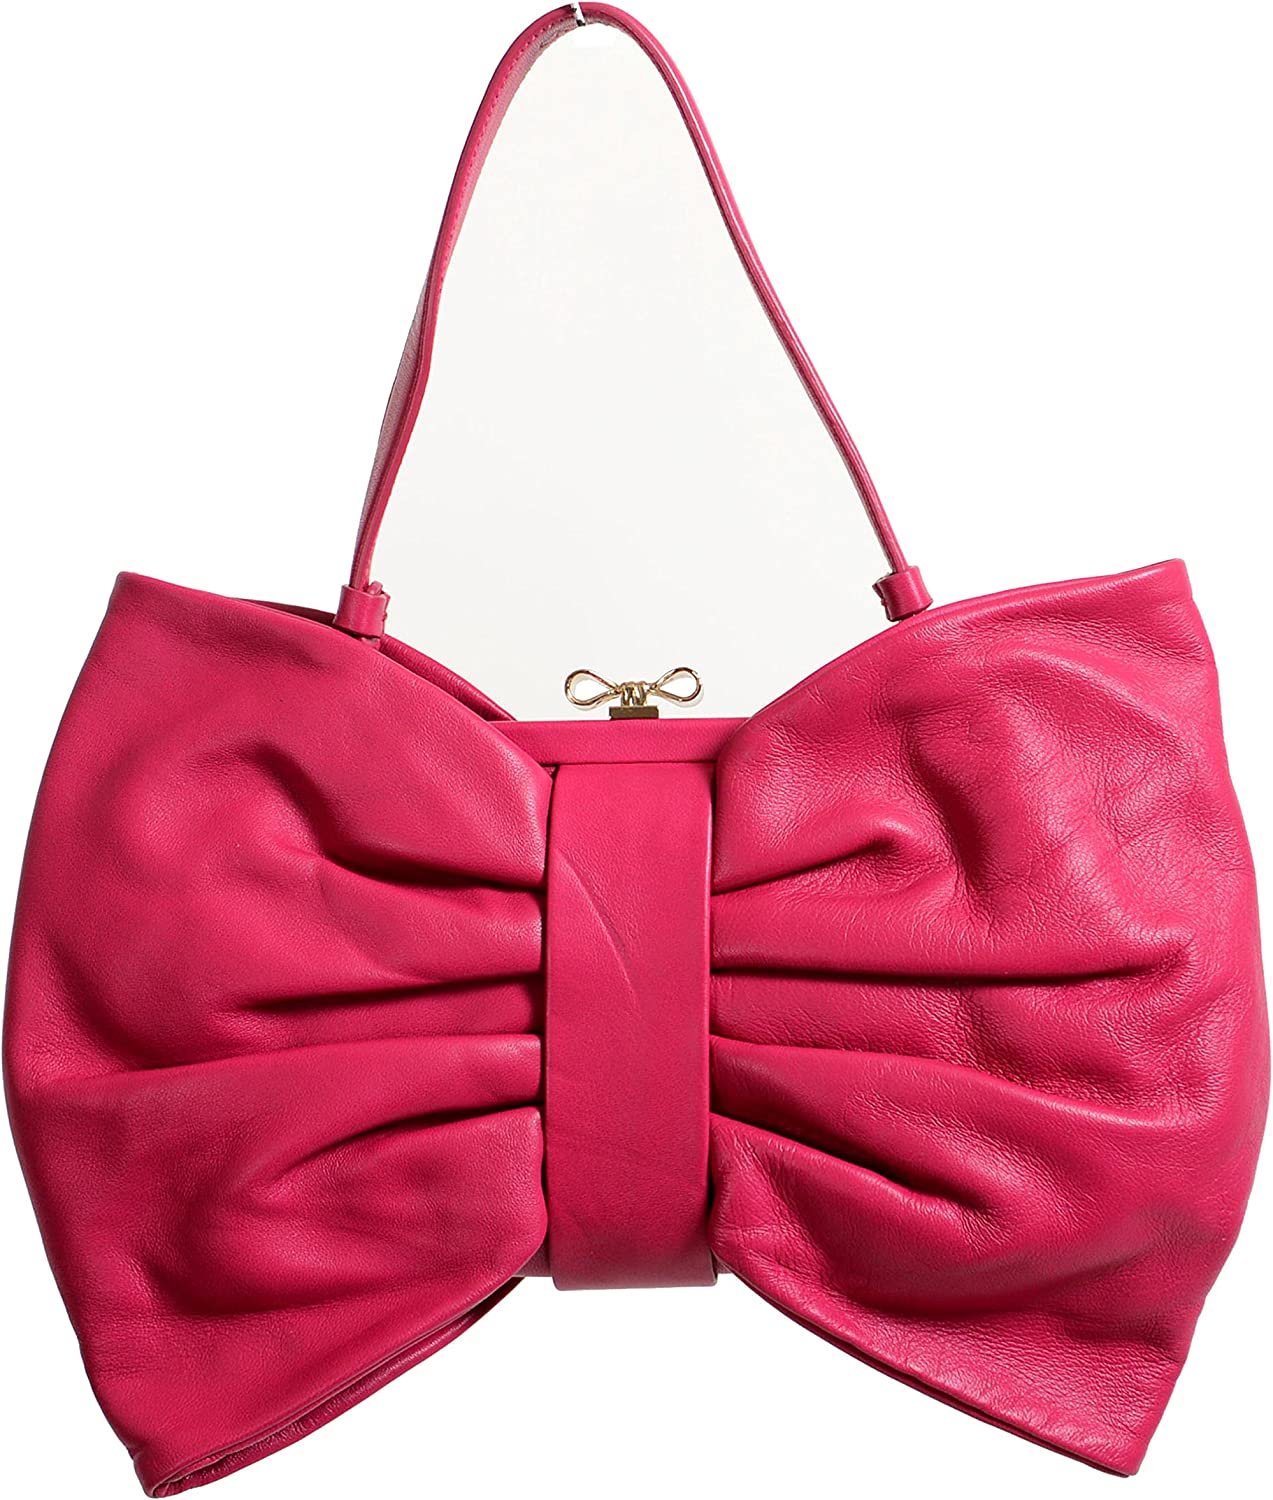 Сумка с бантиком. Valentino Pink Bag. Сумка ред Валентино бант. Valentino Aphrodite Bow Bag. Red Valentino nylon Bow Bag.